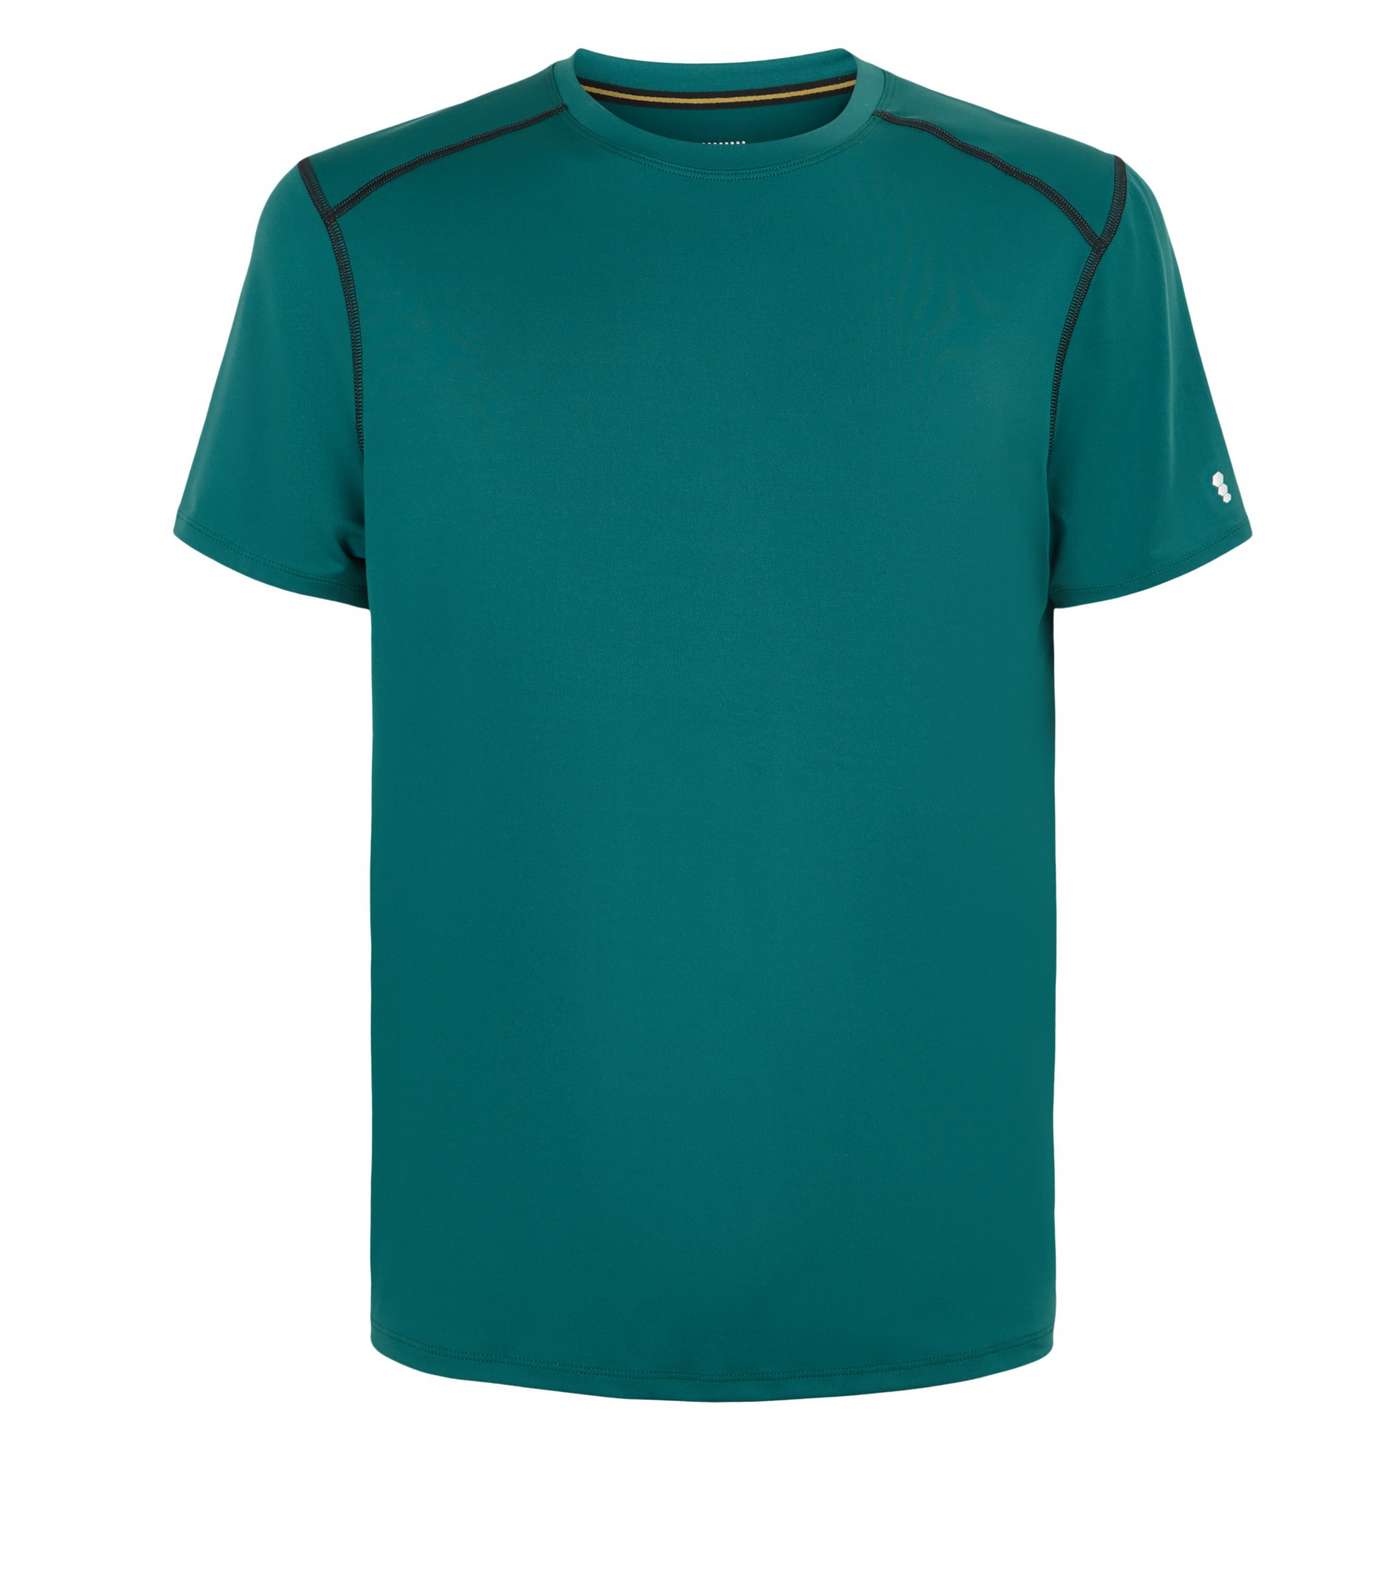 Teal Short Sleeve Sports T-Shirt Image 4